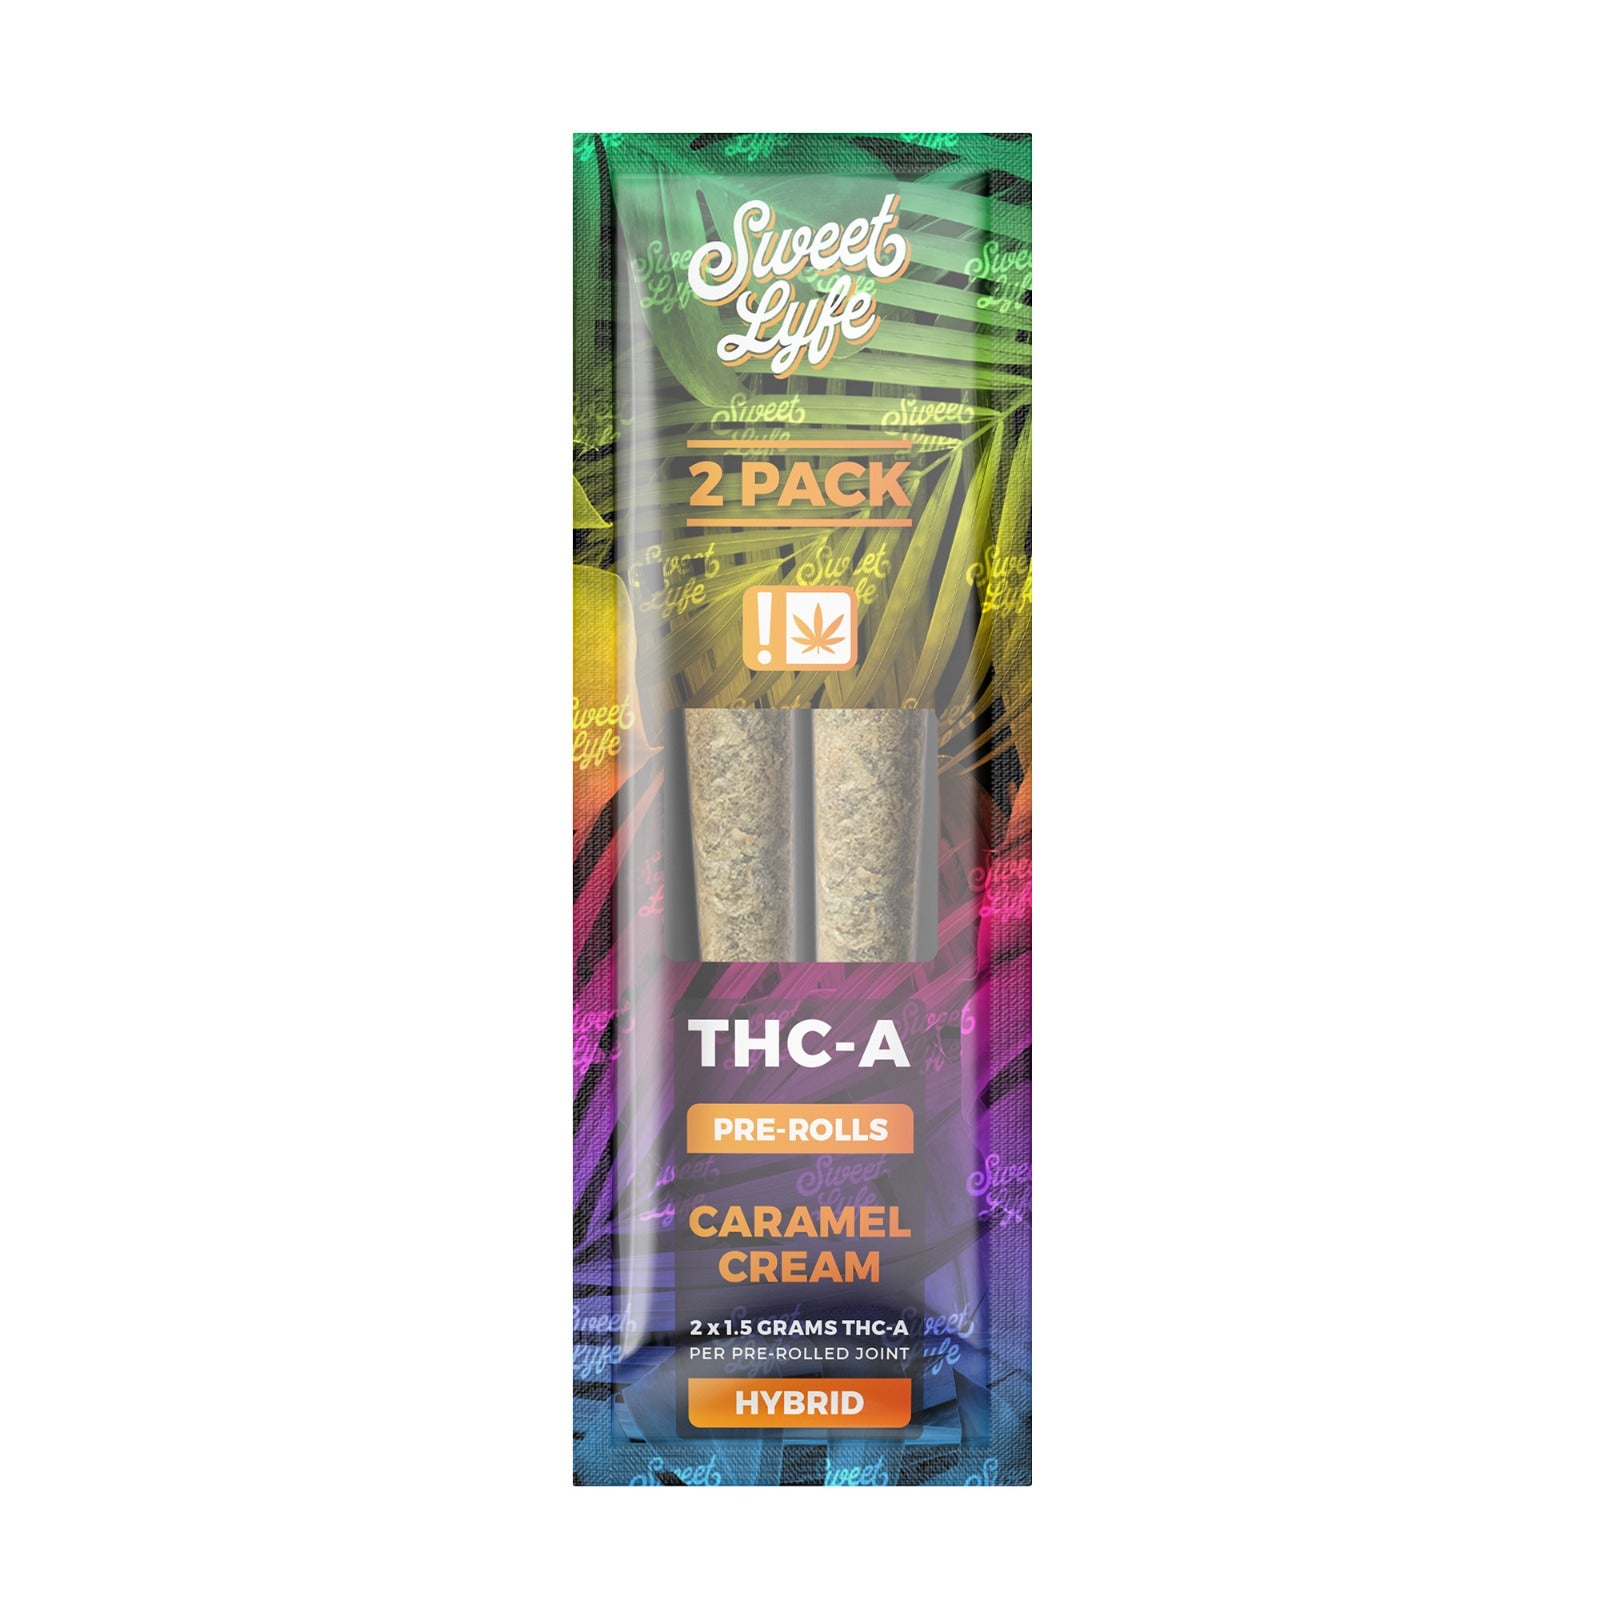 2 Pack Pre-Rolls Joint THC-A|Caramel Cream - Hybrid